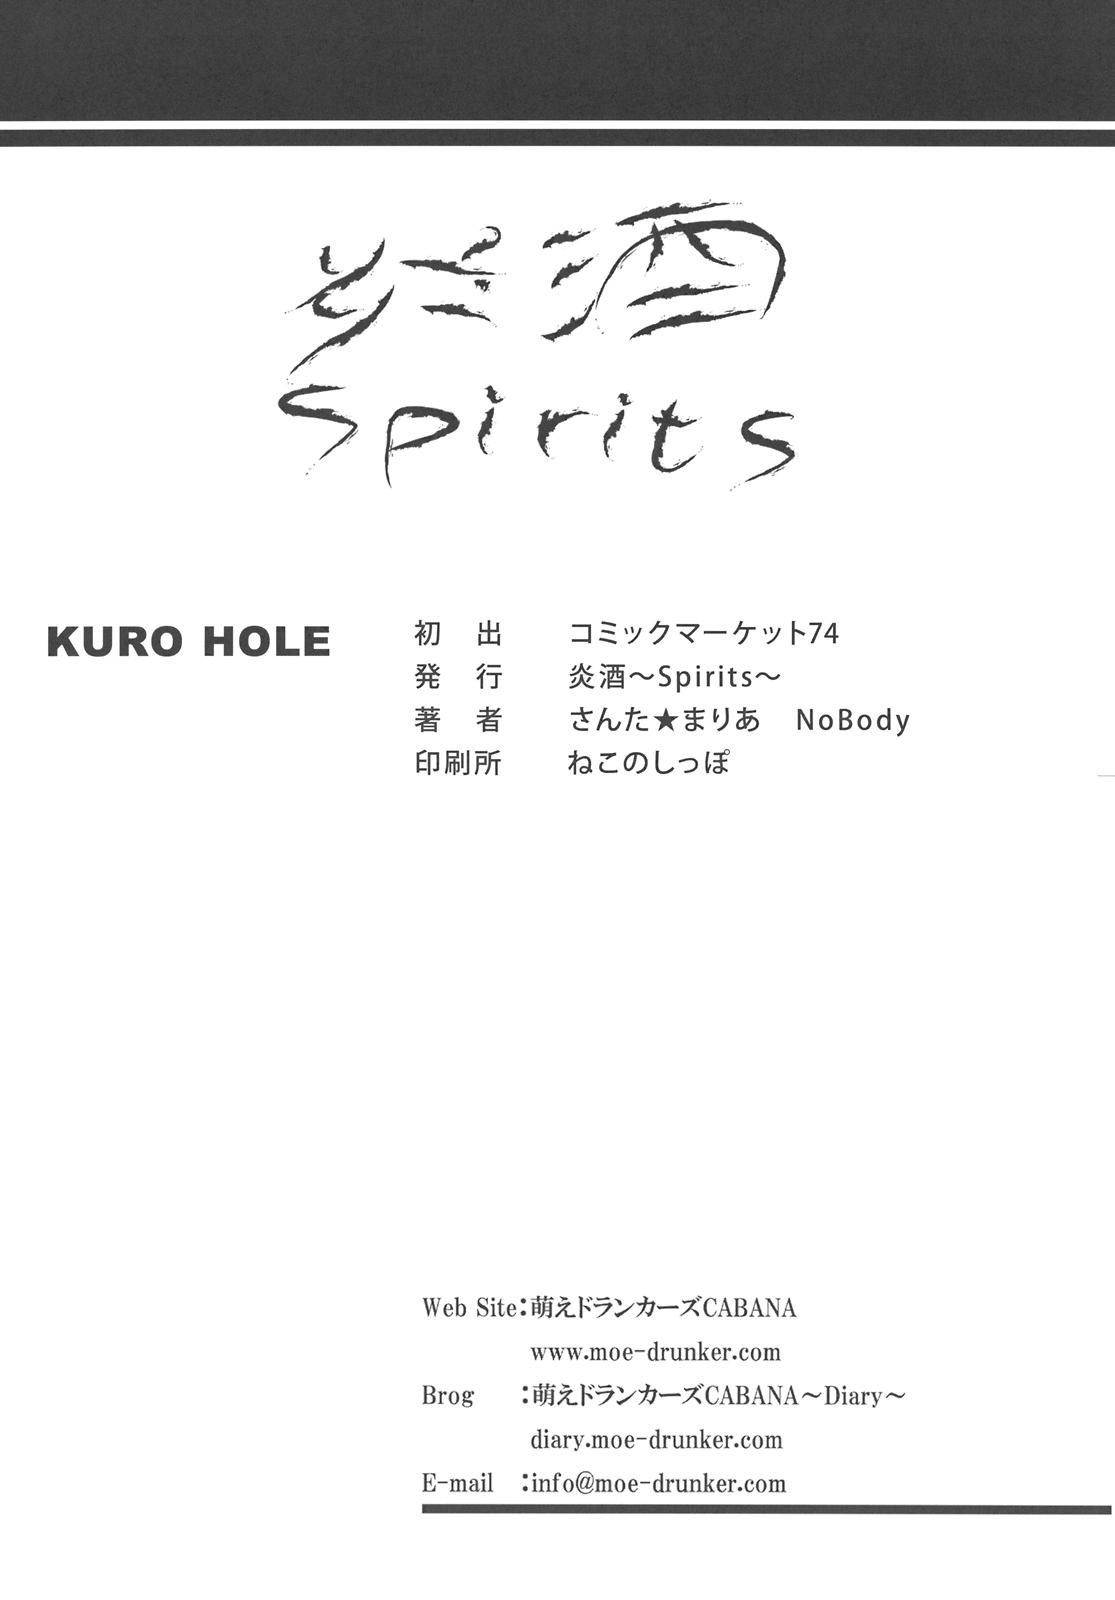 KURO HOLE 33